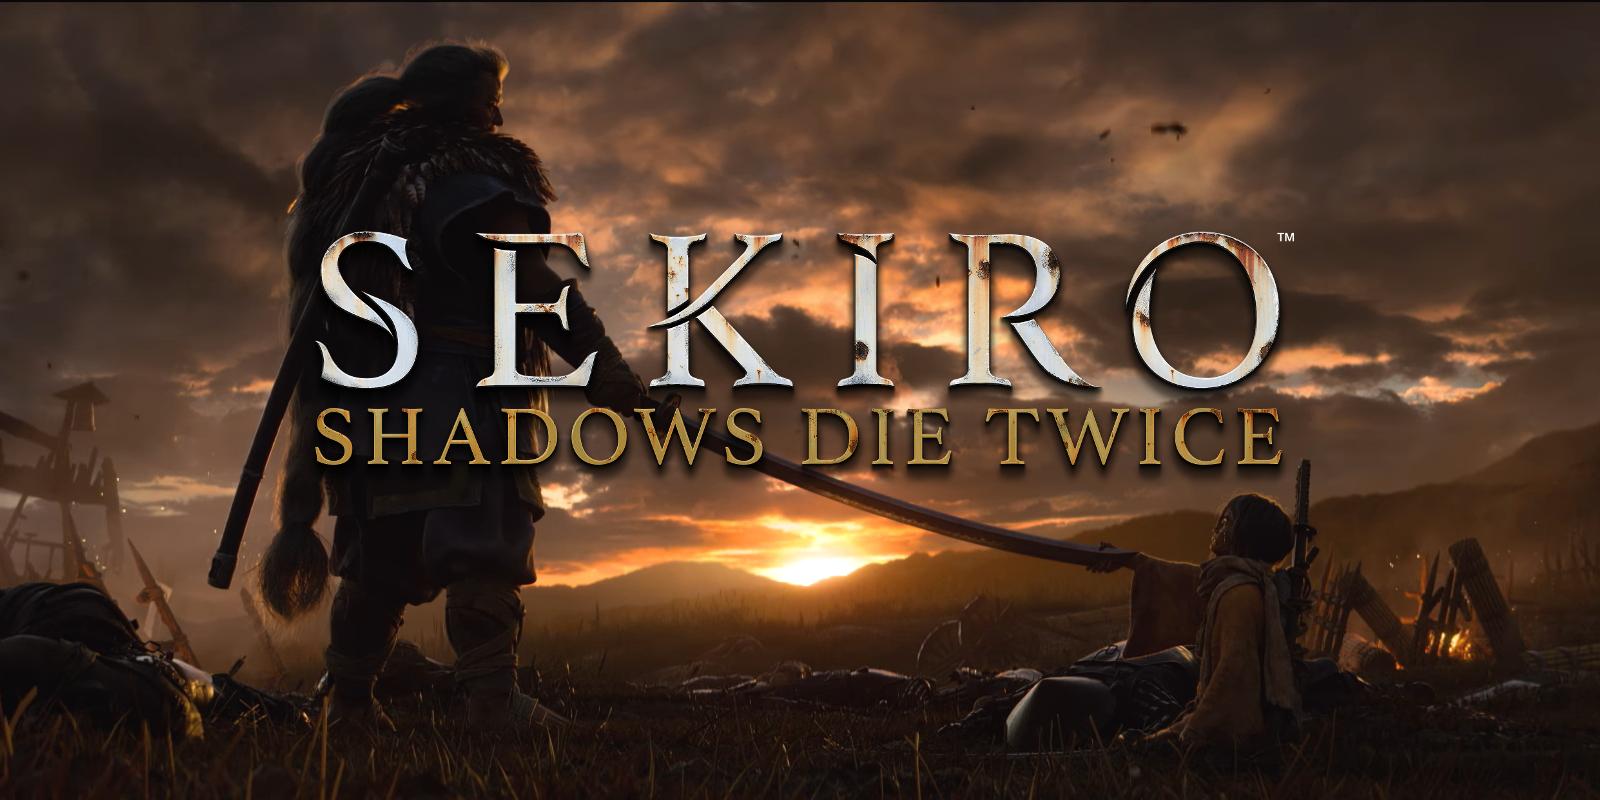 Sekiro: Shadows Die Twice Story